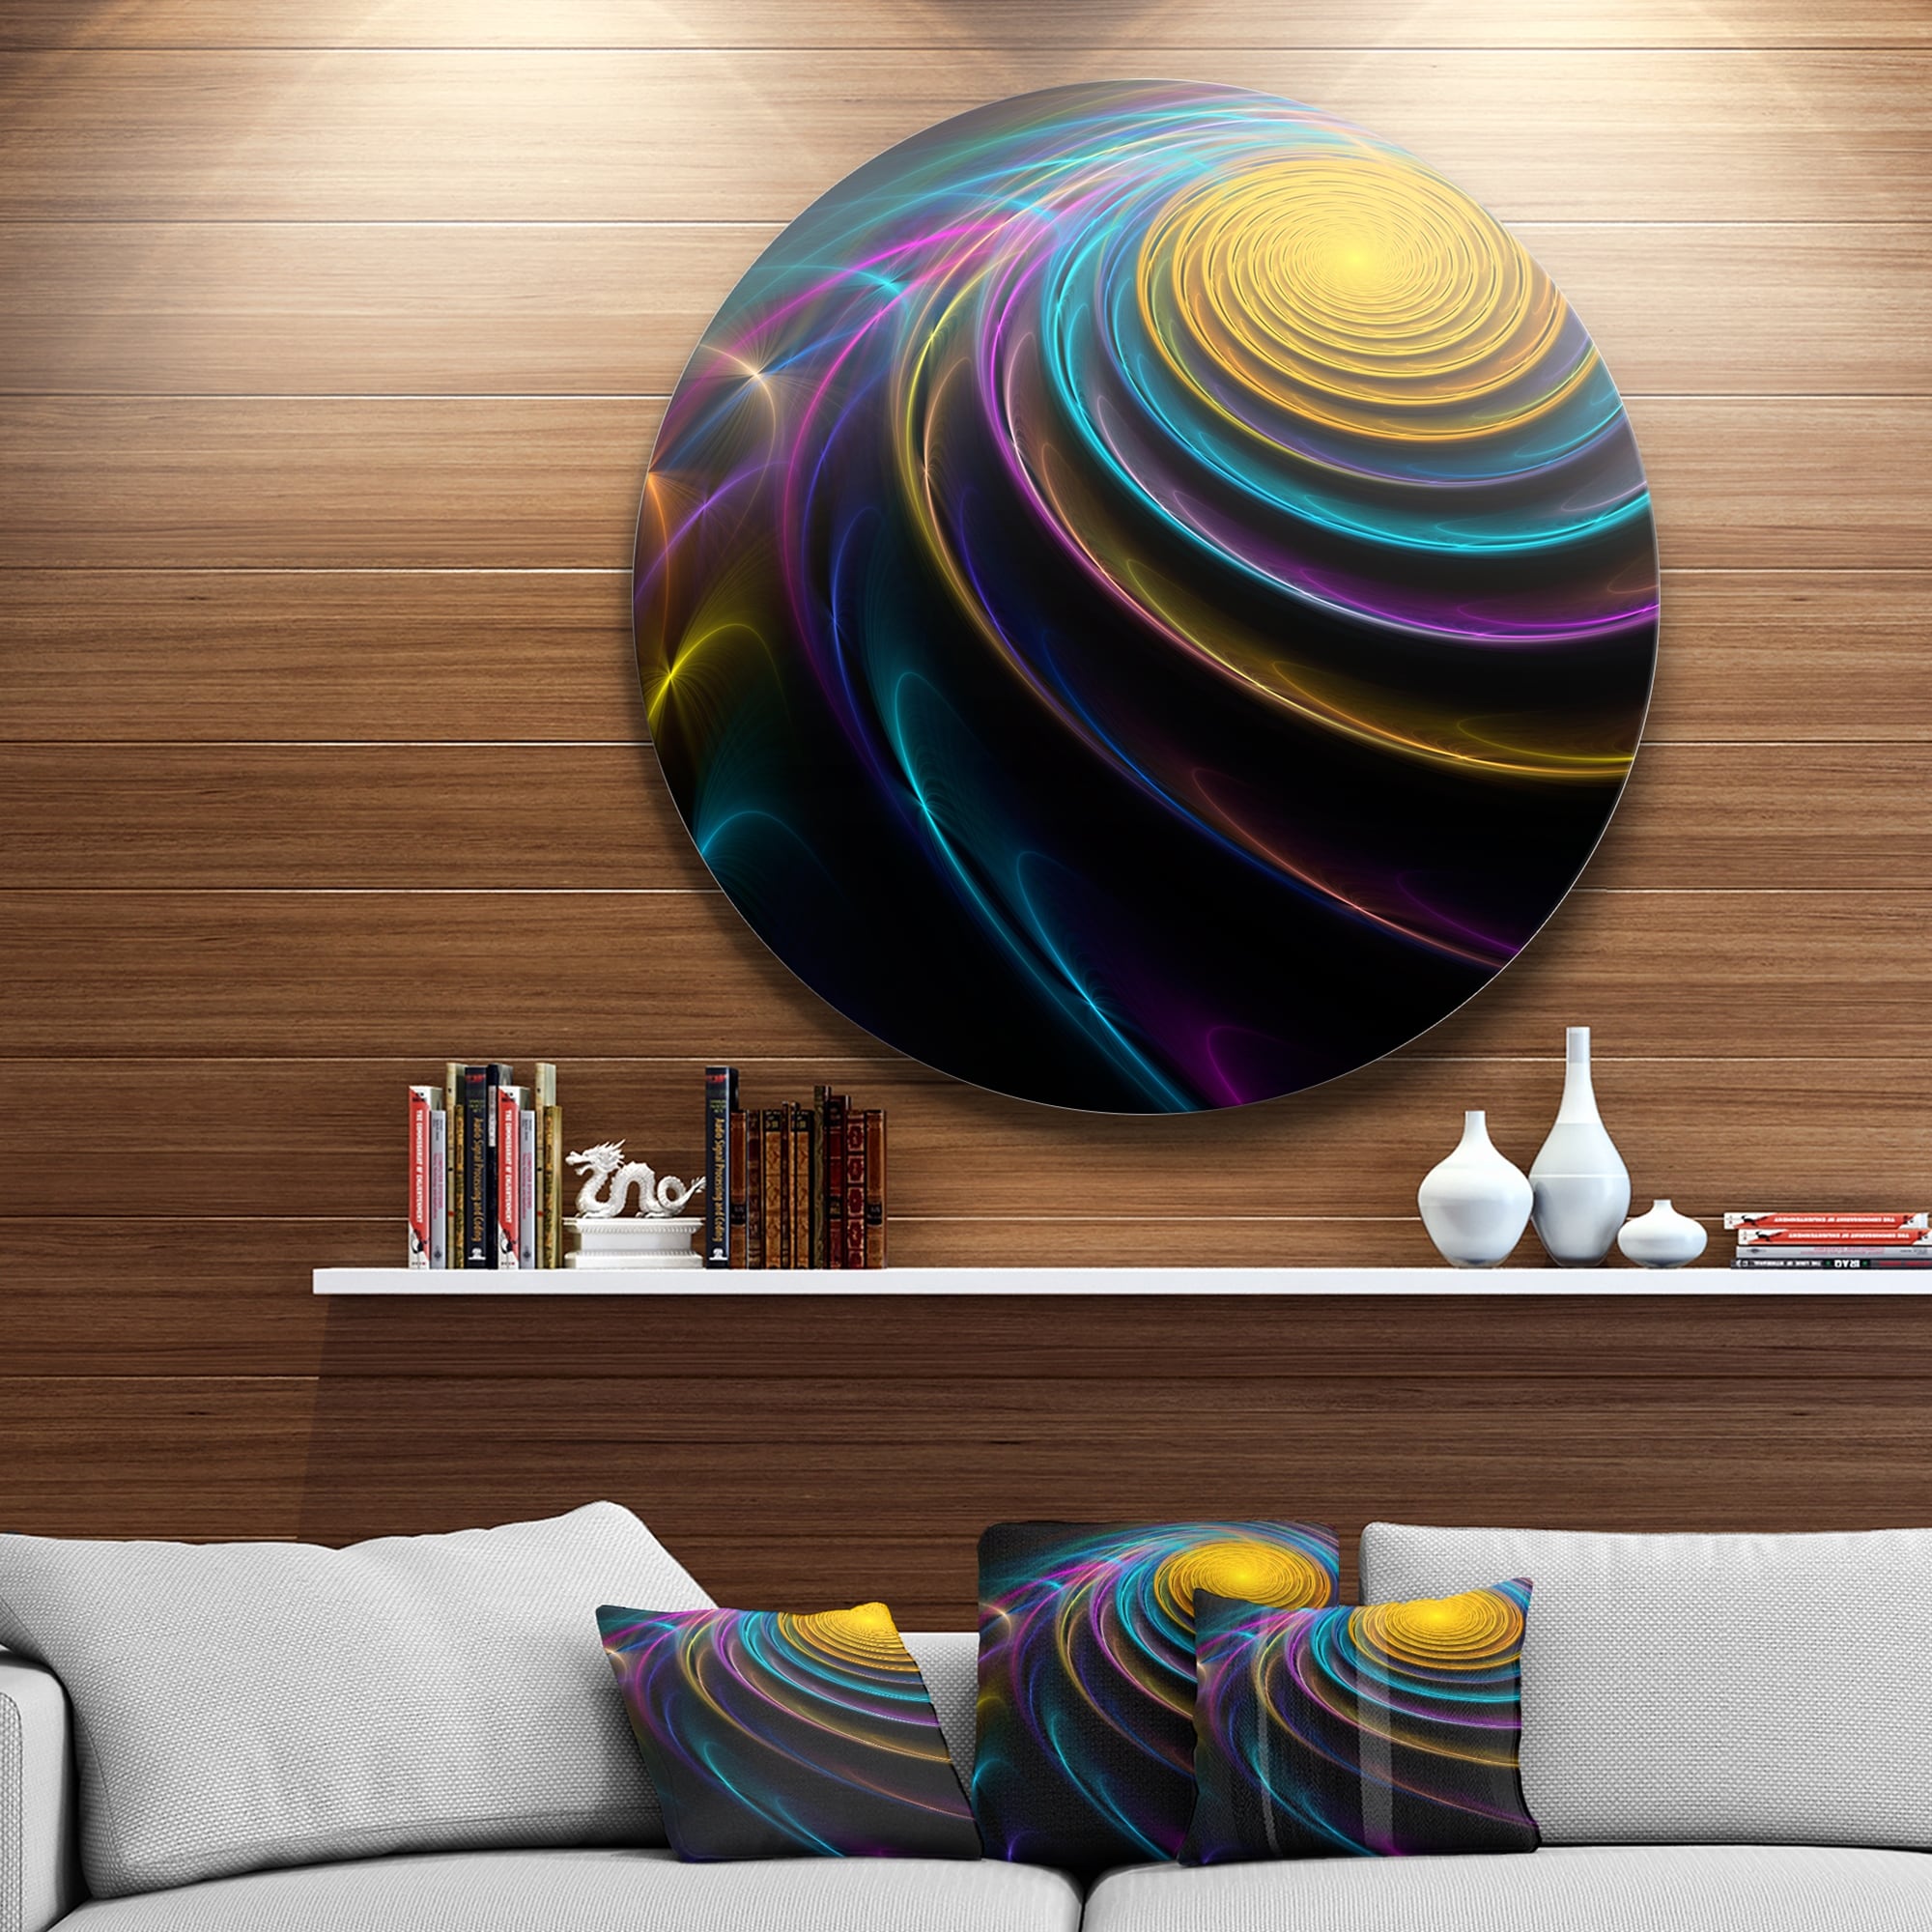 https://ak1.ostkcdn.com/images/products/is/images/direct/86a8fdcf14fd7ebf62694a150230ad340b30a201/Designart-%27Fractal-3D-Colored-Bulgy-Circles%27-Abstract-Art-Circle-Wall-Art.jpg